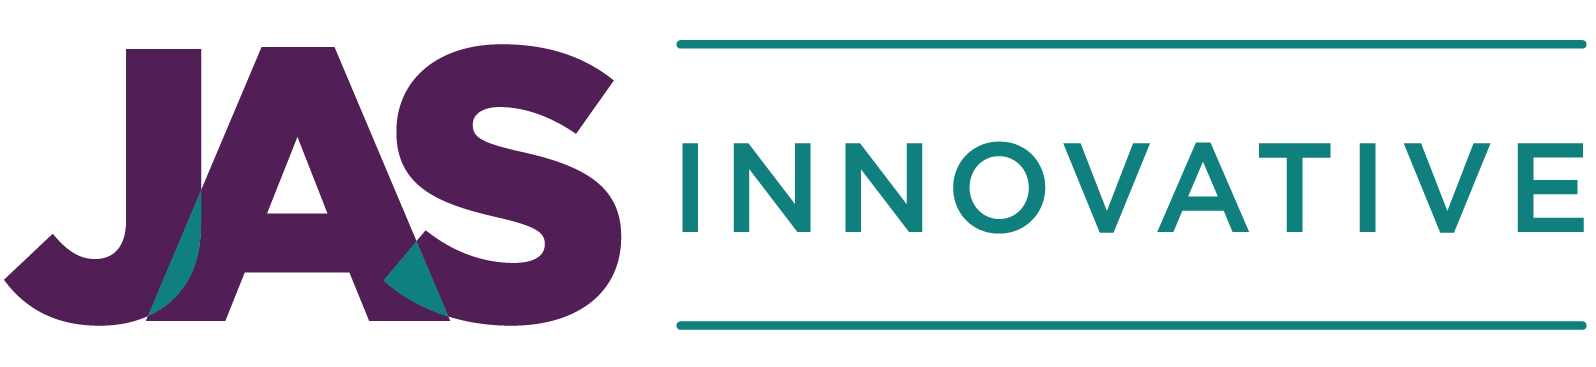 JAS Innovative Logo final